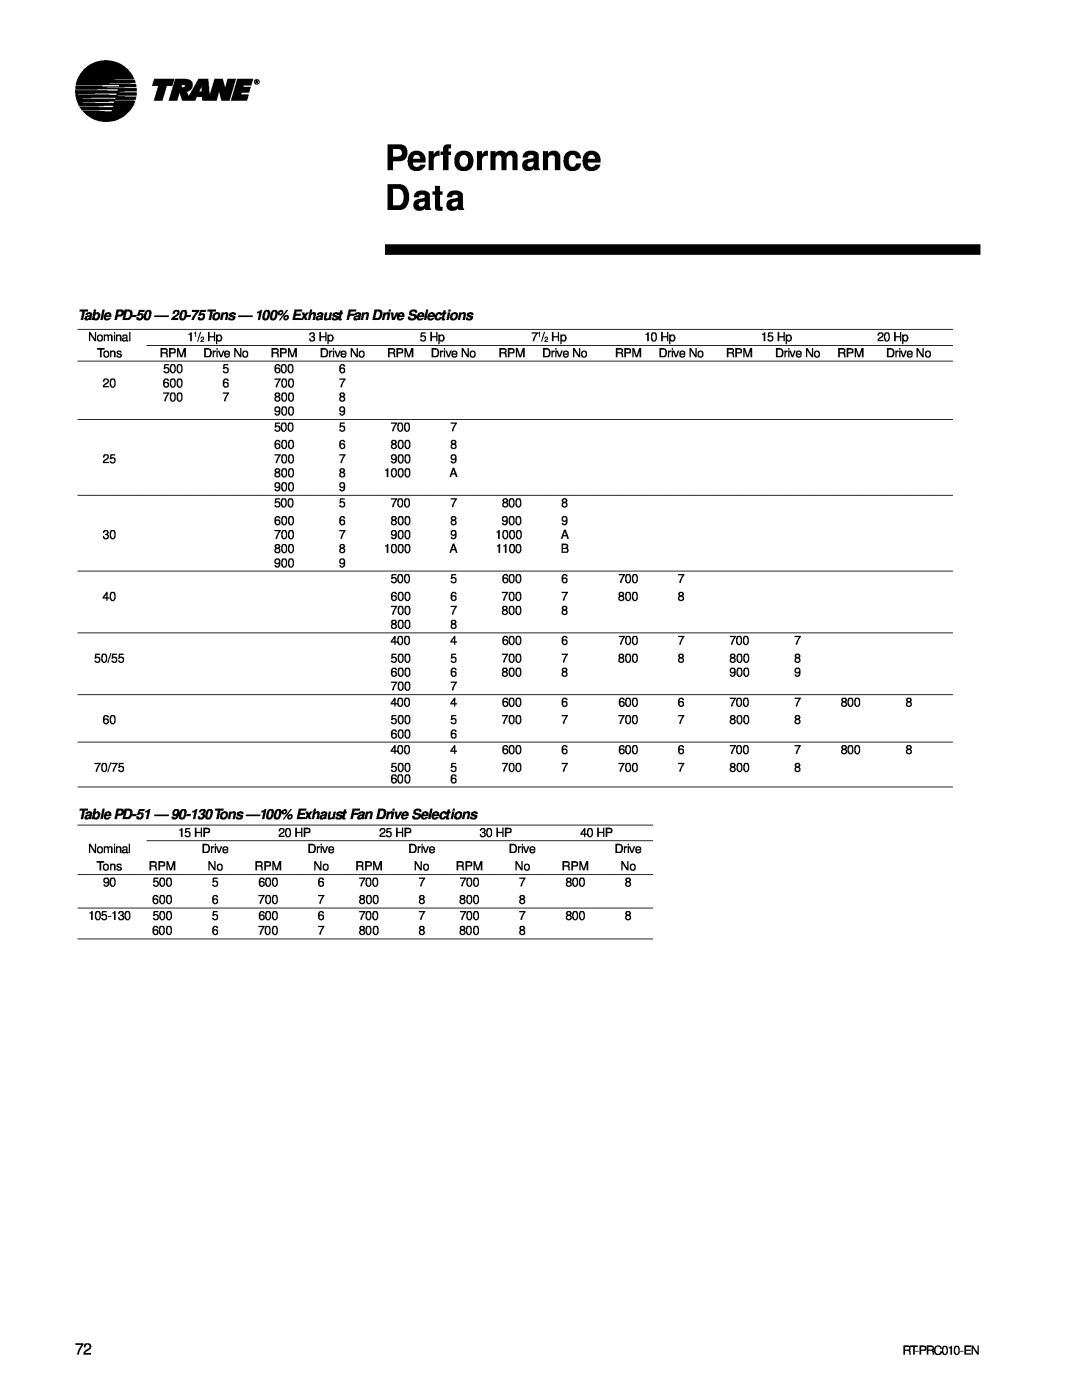 Trane RT-PRC010-EN manual Performance Data, 11/2 Hp 